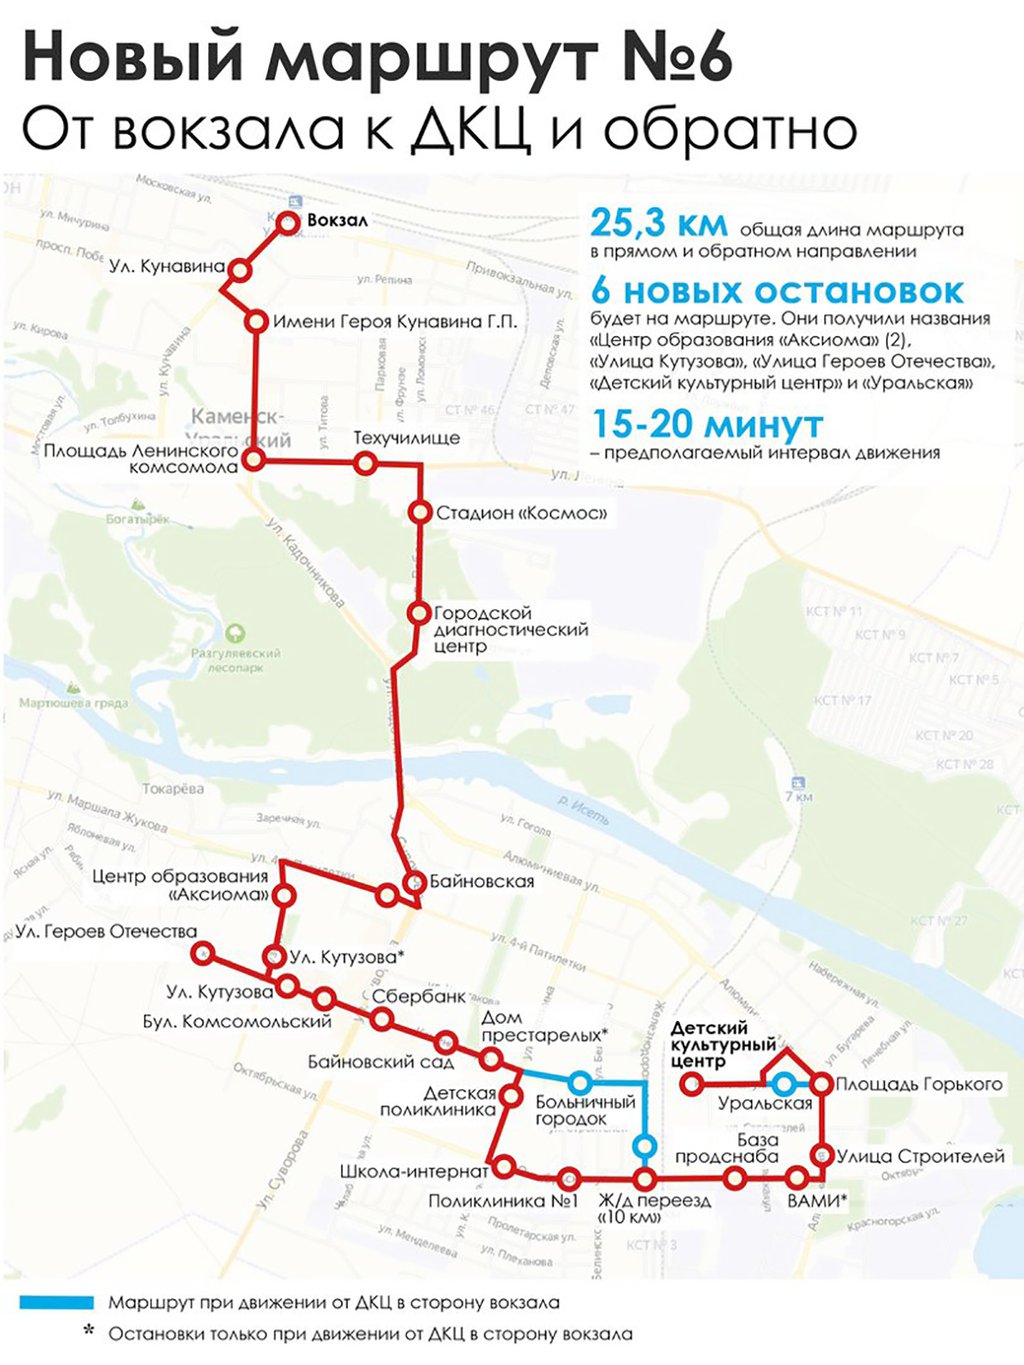 Схема нового автобусного маршрута №6